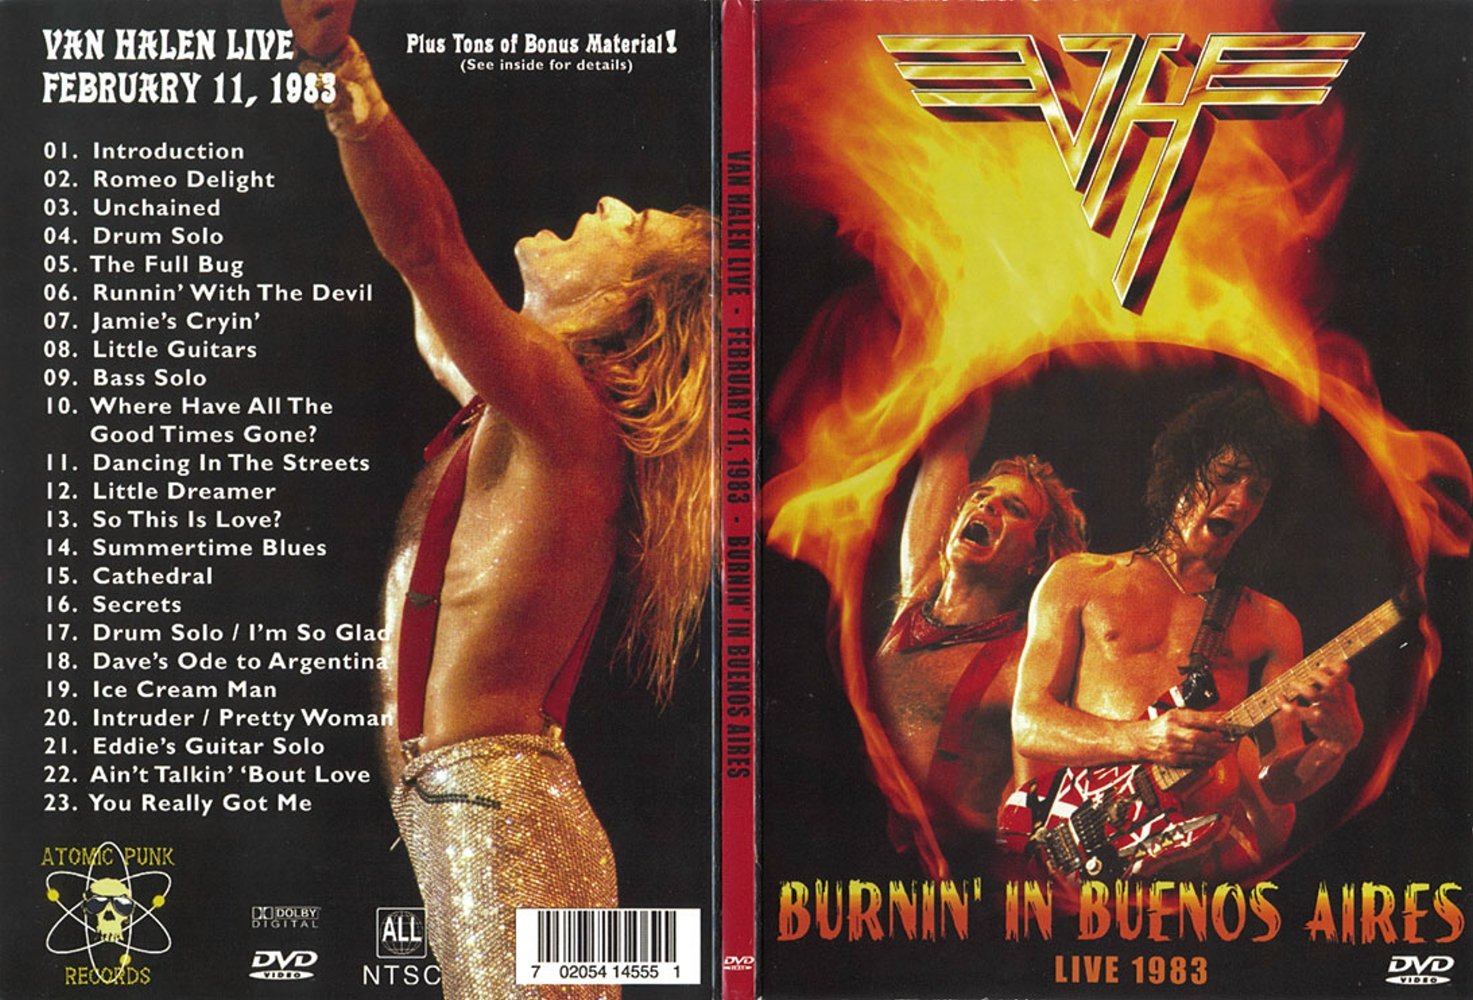 http://4.bp.blogspot.com/_brcl7Spzbn4/S_KUeRmiYUI/AAAAAAAAAag/TN5dXi7_6_g/s1600/Van+Halen+-+Live+February+11-1983+Burnin+In+Buenos+Aires.jpg